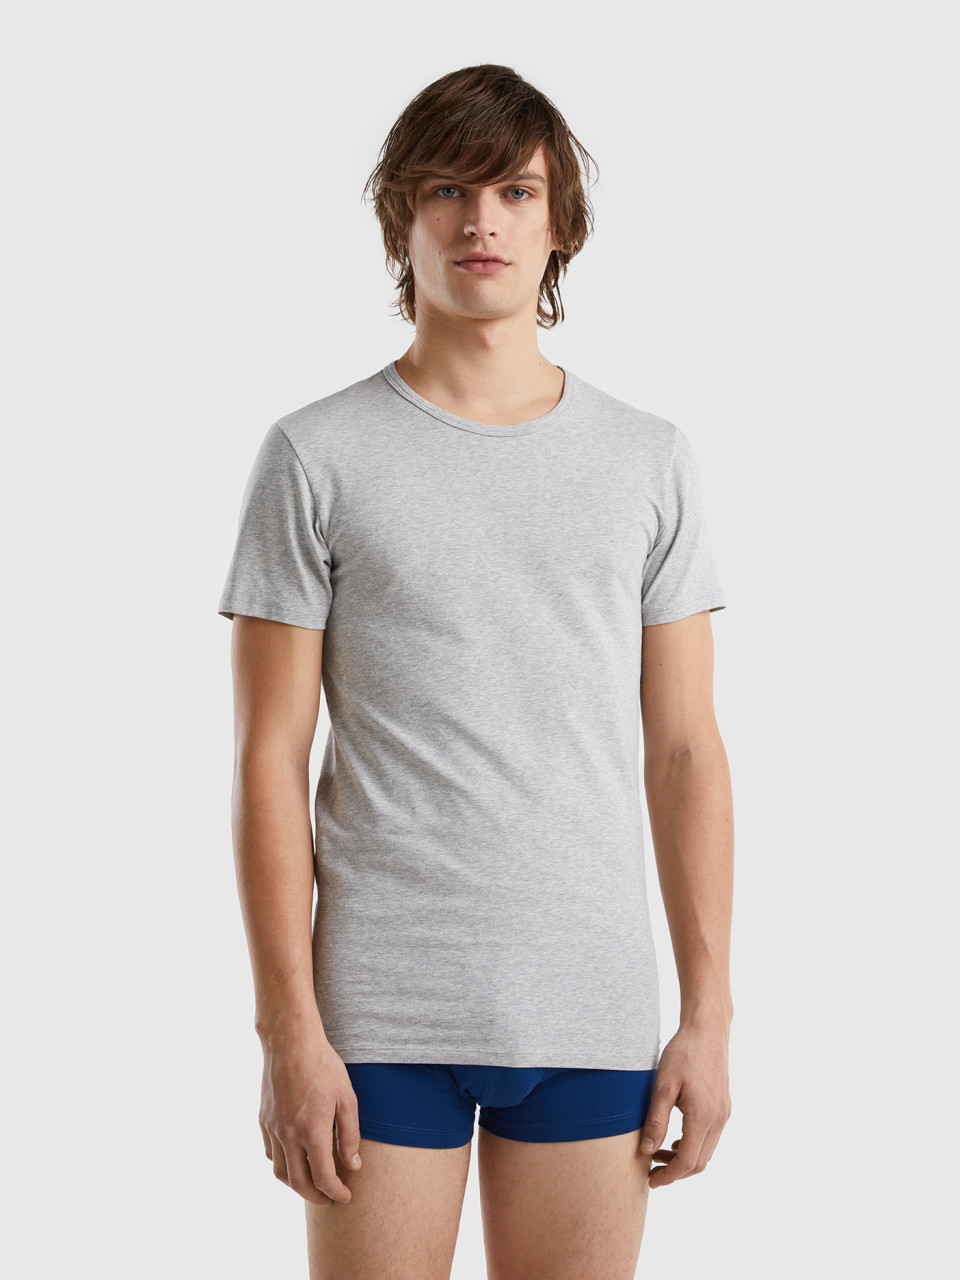 Benetton, Organic Stretch Cotton T-shirt, Light Gray, Men